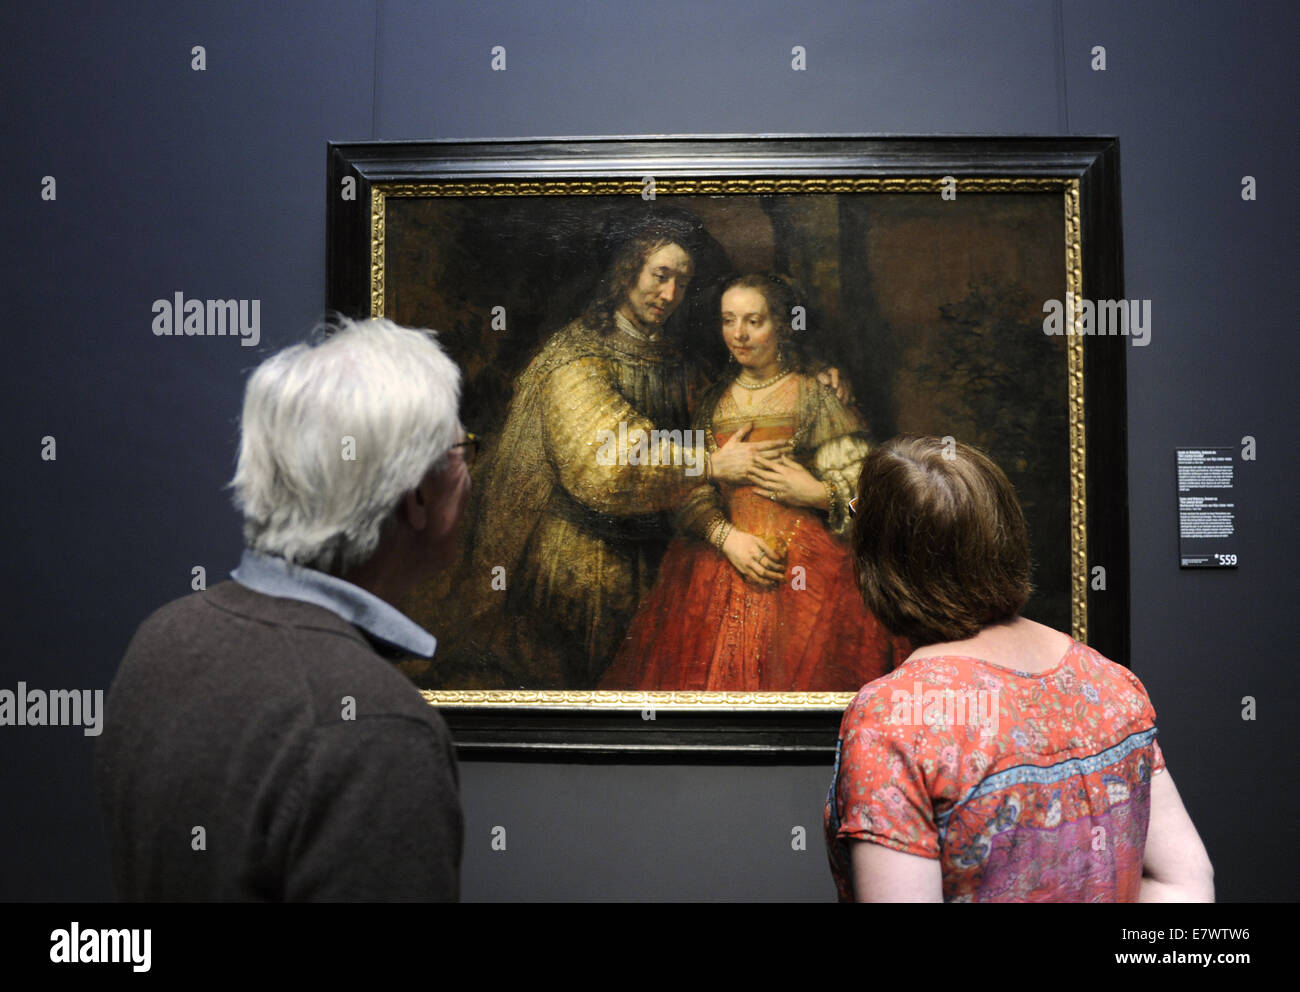 Pareja mirando la novia Jewisth, 1667 por Rembrandt (1606-1669). Óleo sobre lienzo. Rijksmuseum. Amsterdam. Países Bajos. Foto de stock